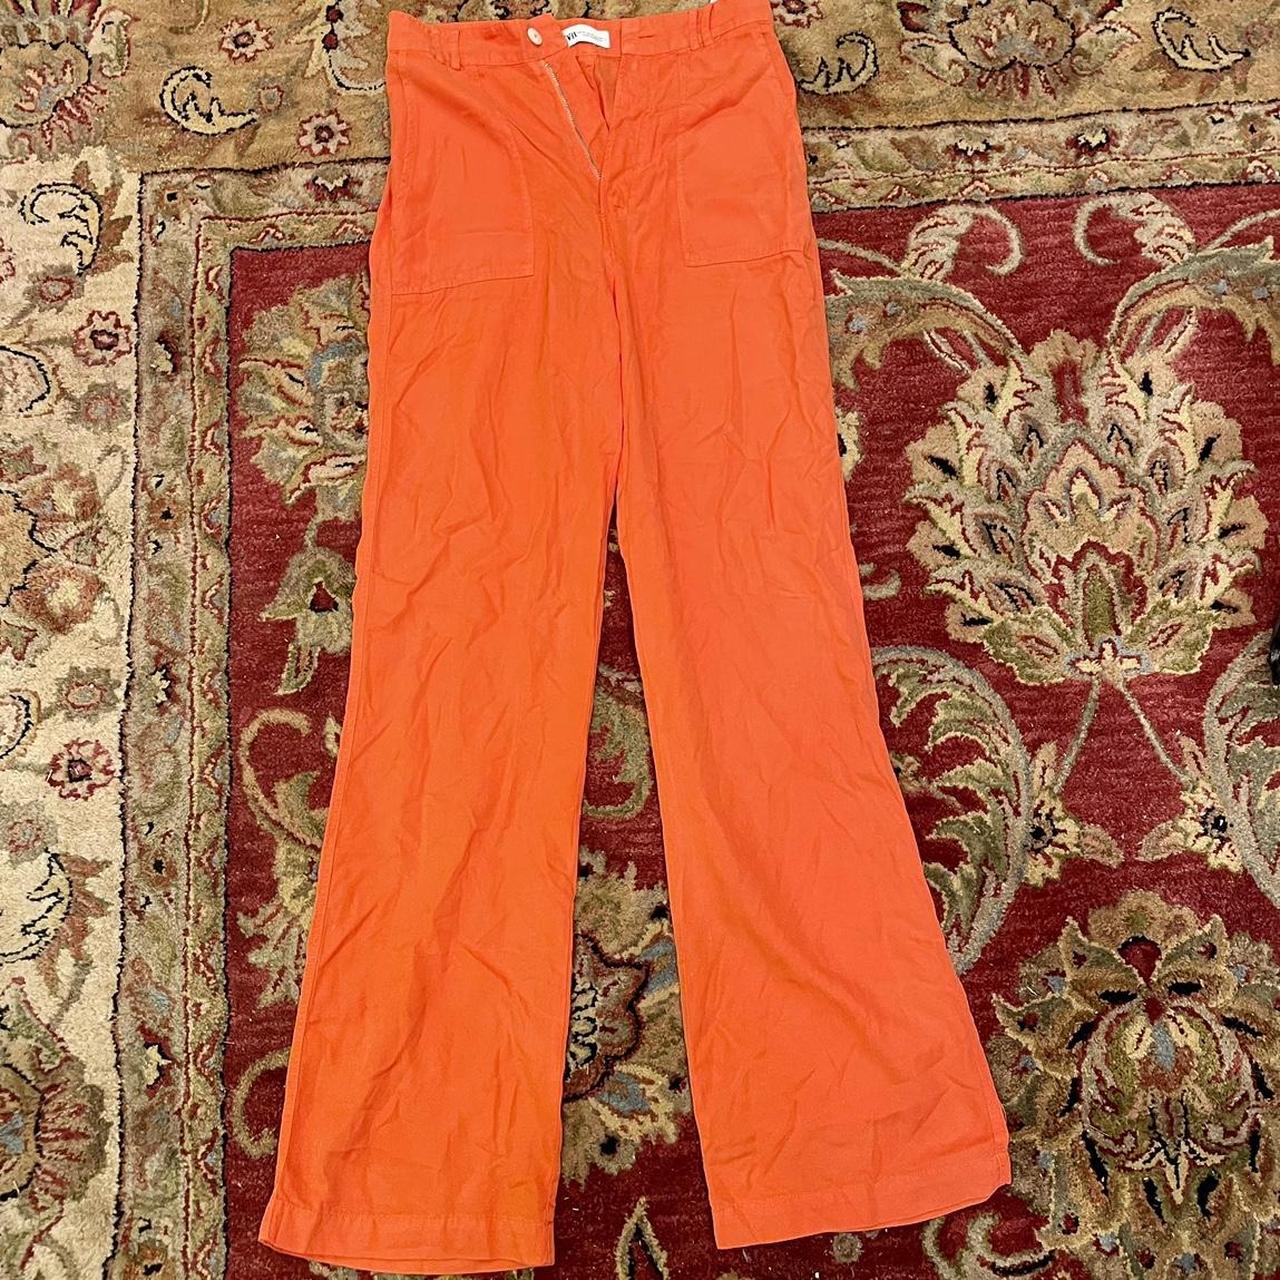 Zara orange high waisted pants. More of a - Depop